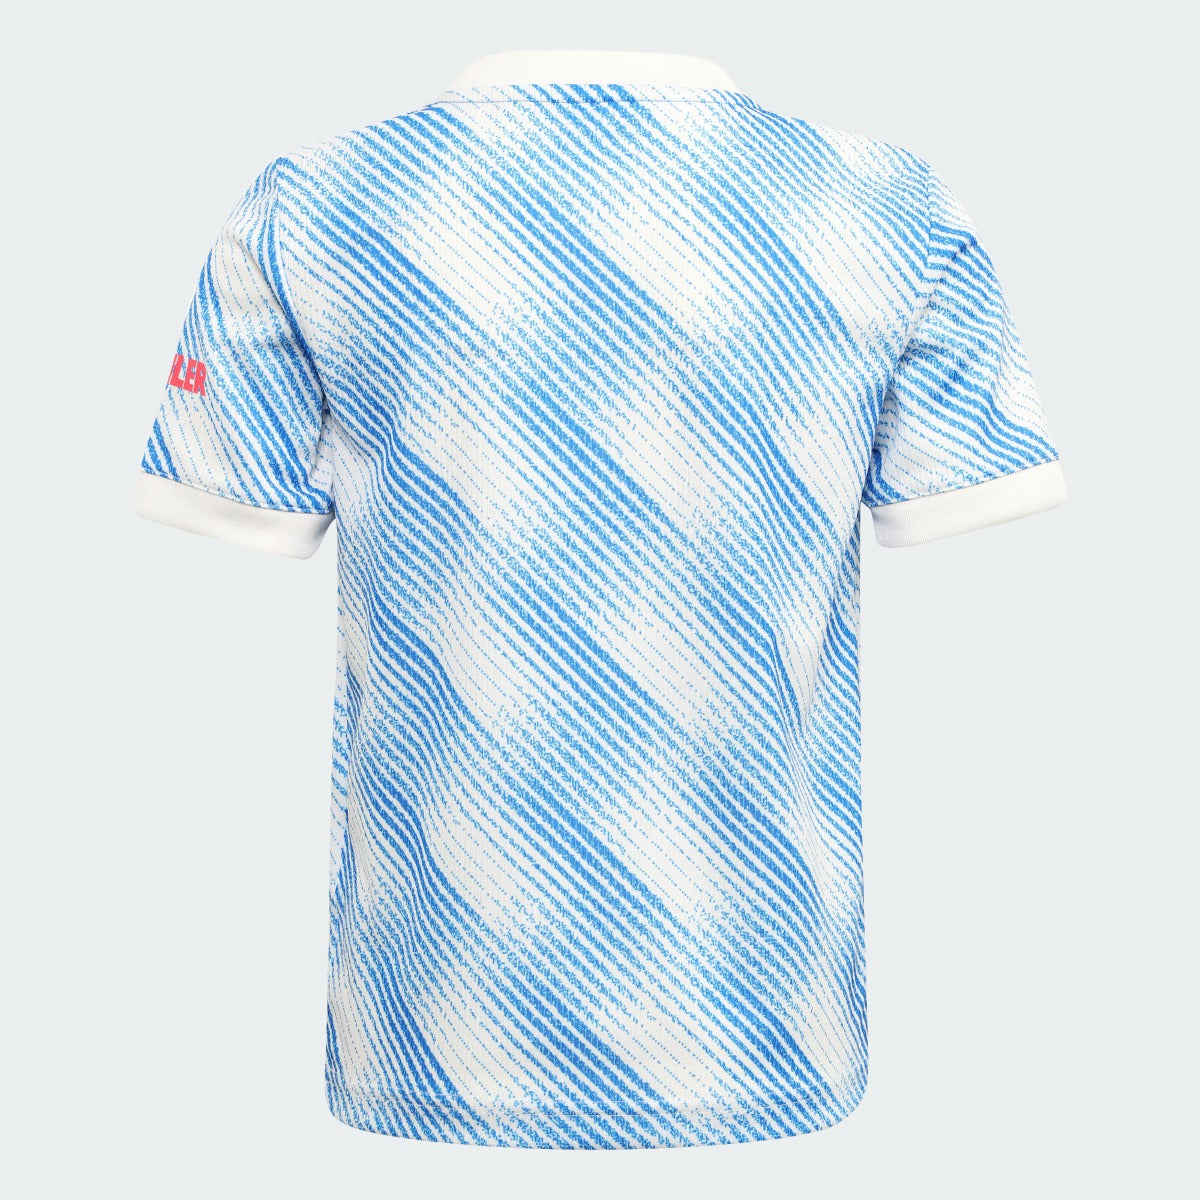 Adidas 2021-22 Manchester United Away MINI Kit - White-Glow Blue (Shirt - Back)